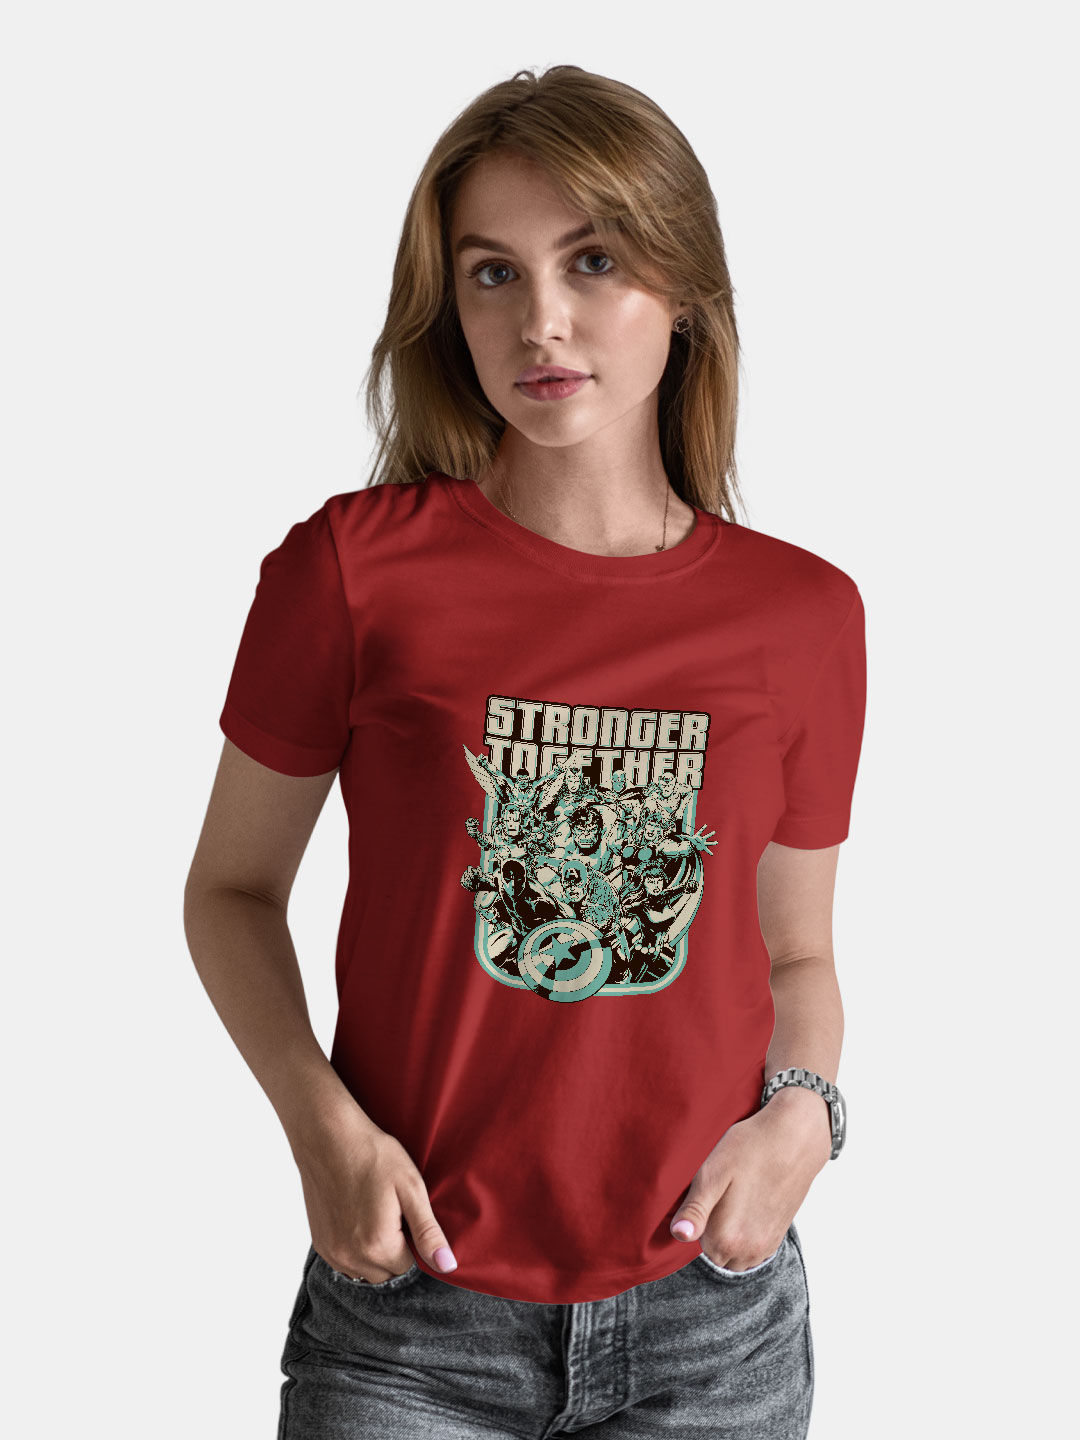 Shirts, Shirt sketch, Women shirt designs